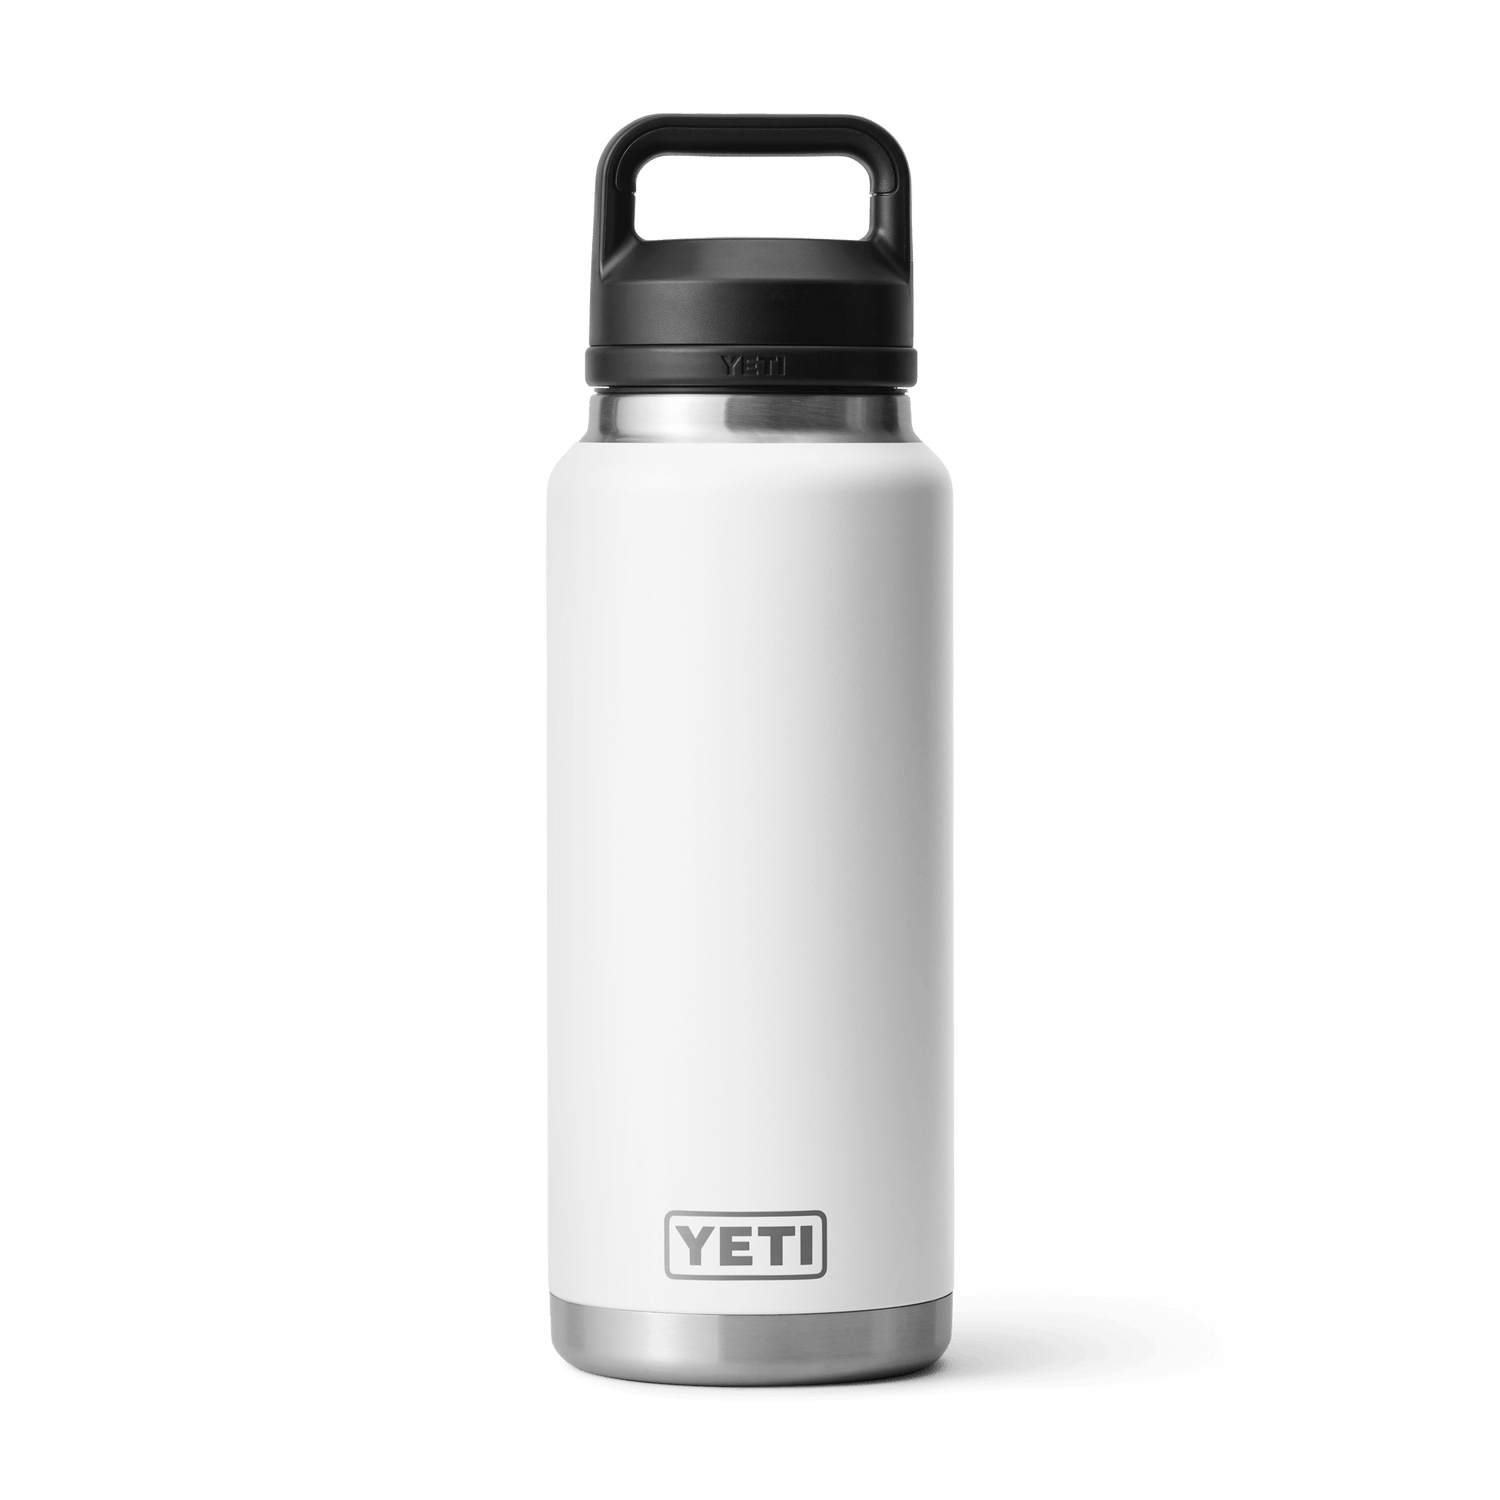 Ice Shaker 36oz Bottle - Red : Target